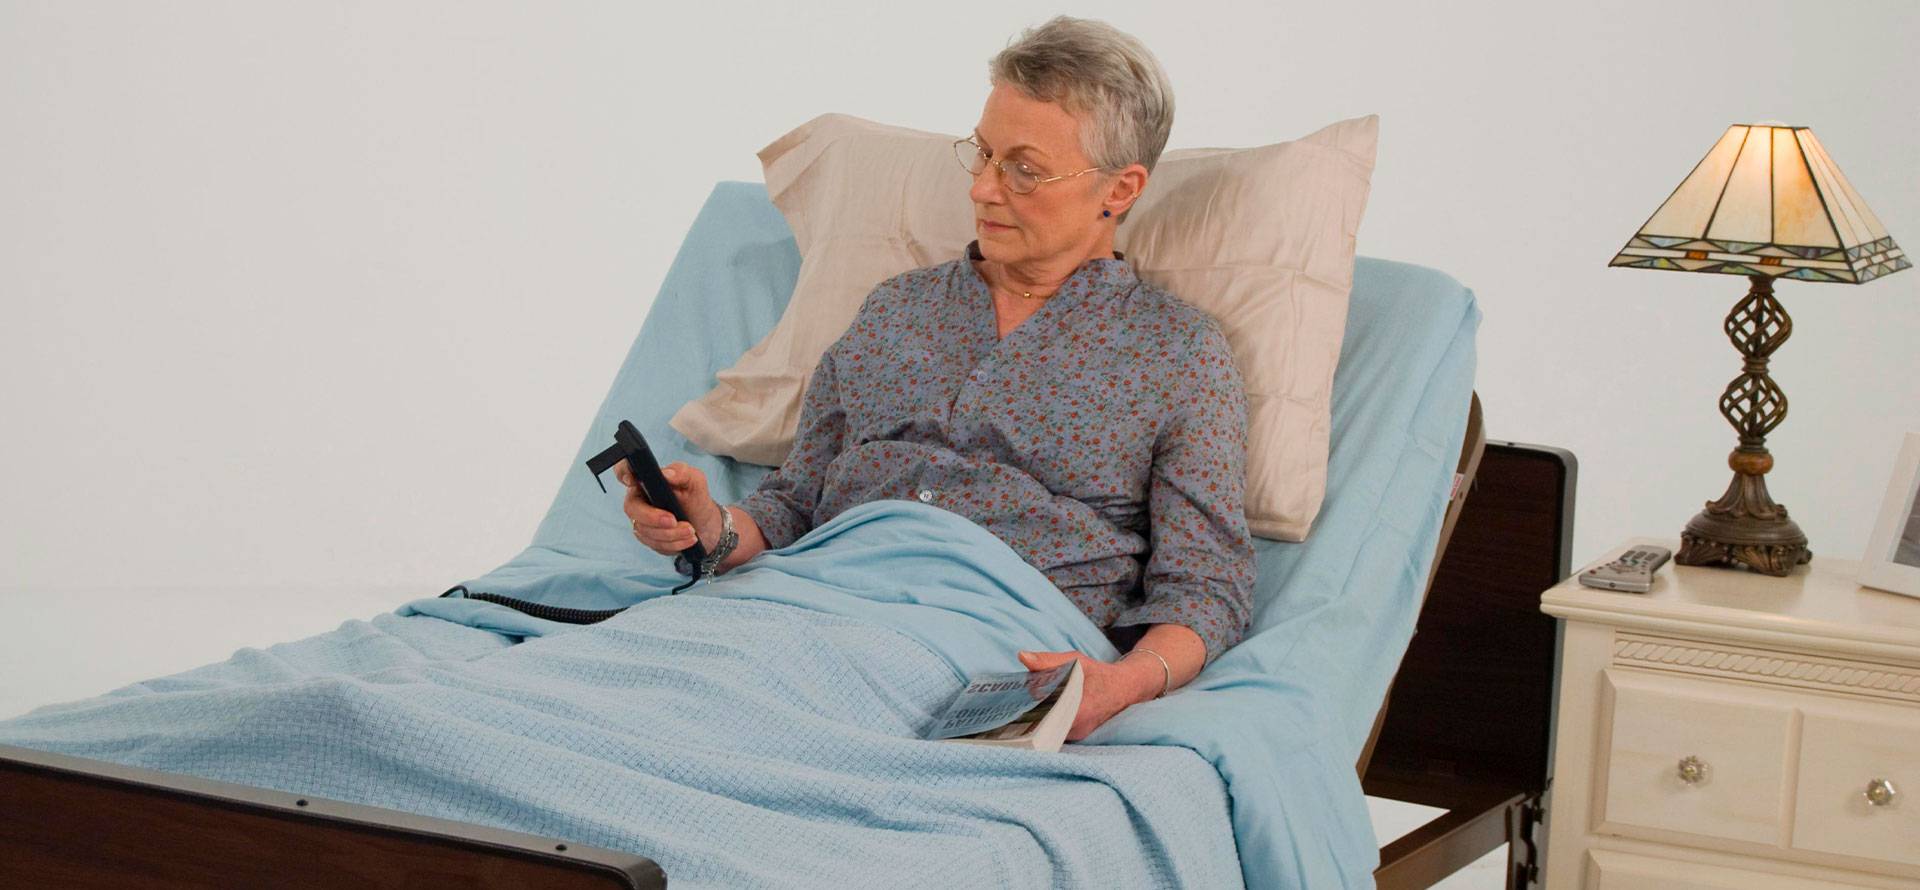 An elderly woman is reading lying on a mattress.